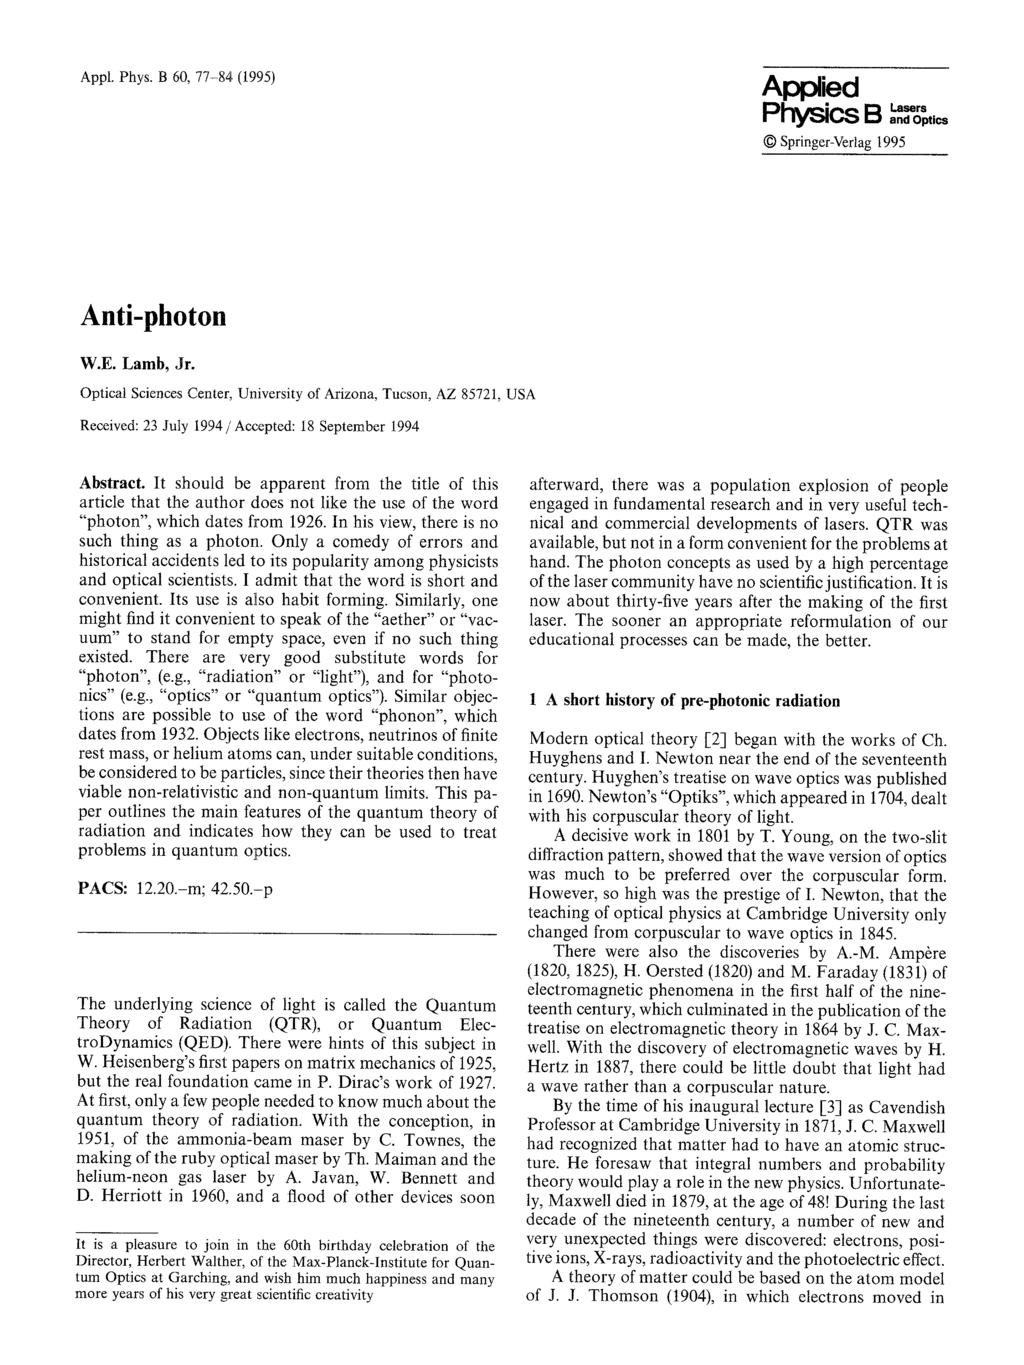 Anti-photon W.E. Lamb, Jr. Optical Sciences Center, University of Arizona, Tucson, AZ 85721, USA Received: 23 July 1994/Accepted: 18 September 1994 Abstract.